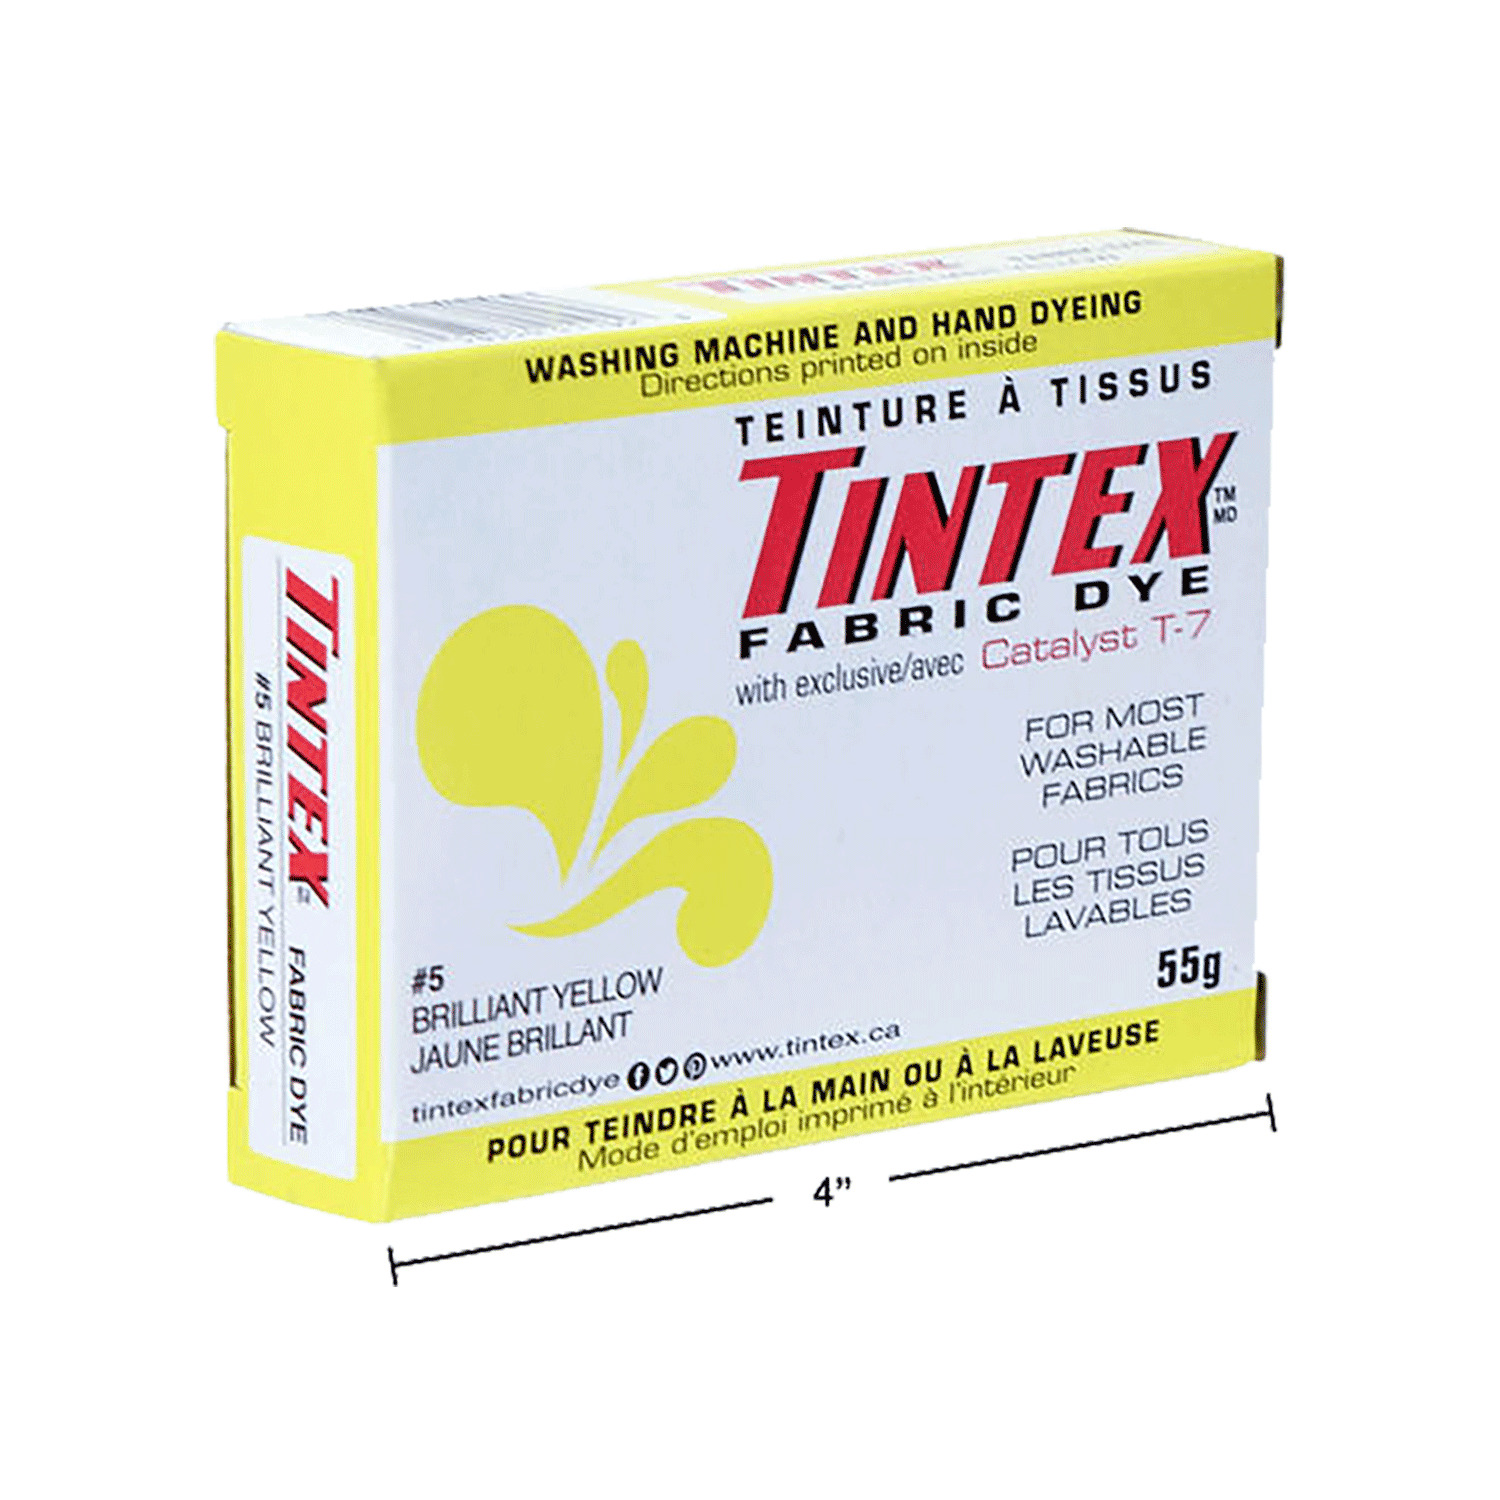 Tintex - Teinture à tissues tout usage - Jaune brillant #5